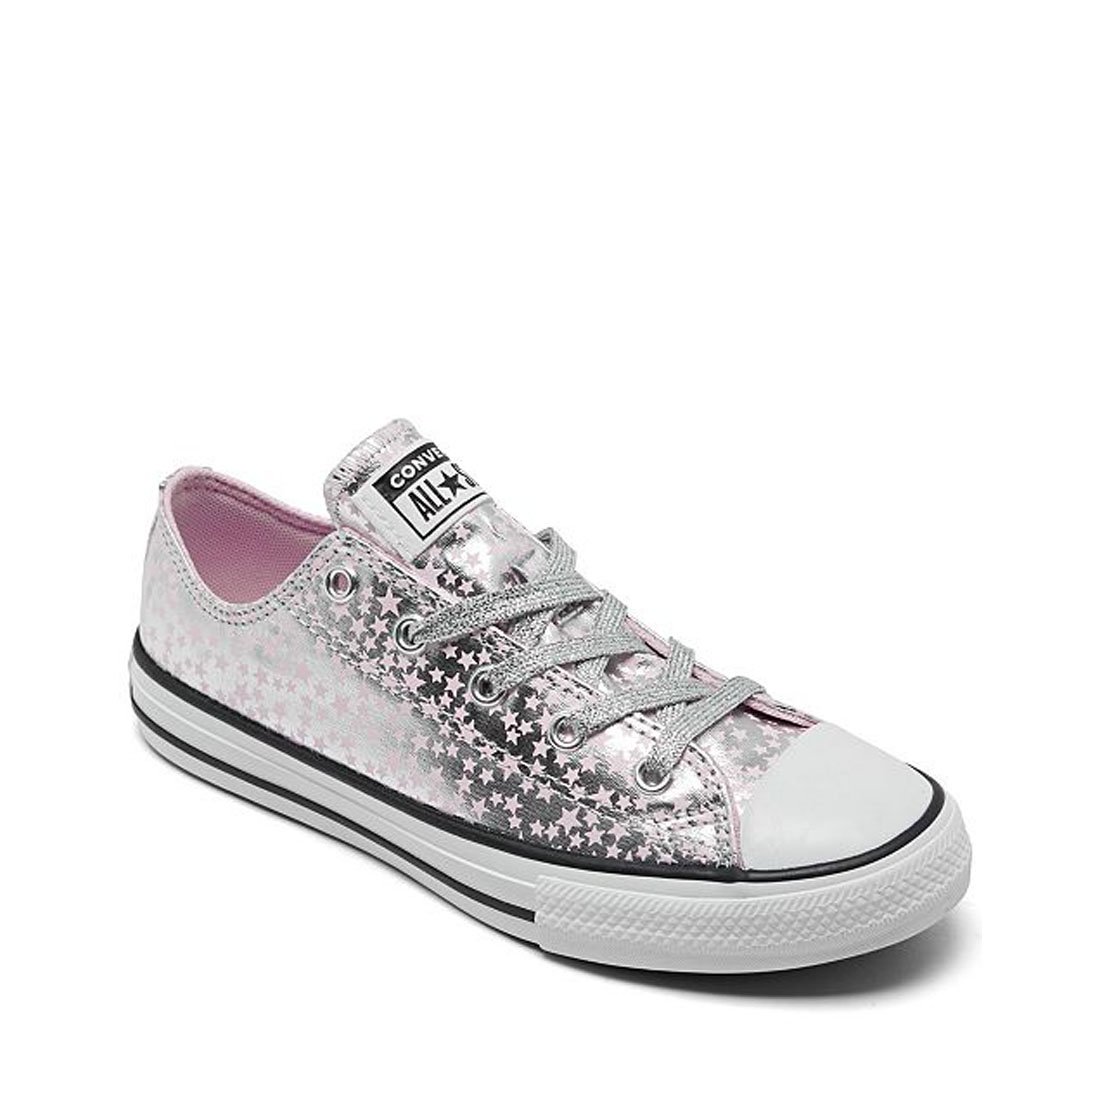 Converse Chuck Taylor All Star Low Top Girls/Child Shoe Little 11.5 Casual 669705F Pink Glaze/Silver - Walmart.com